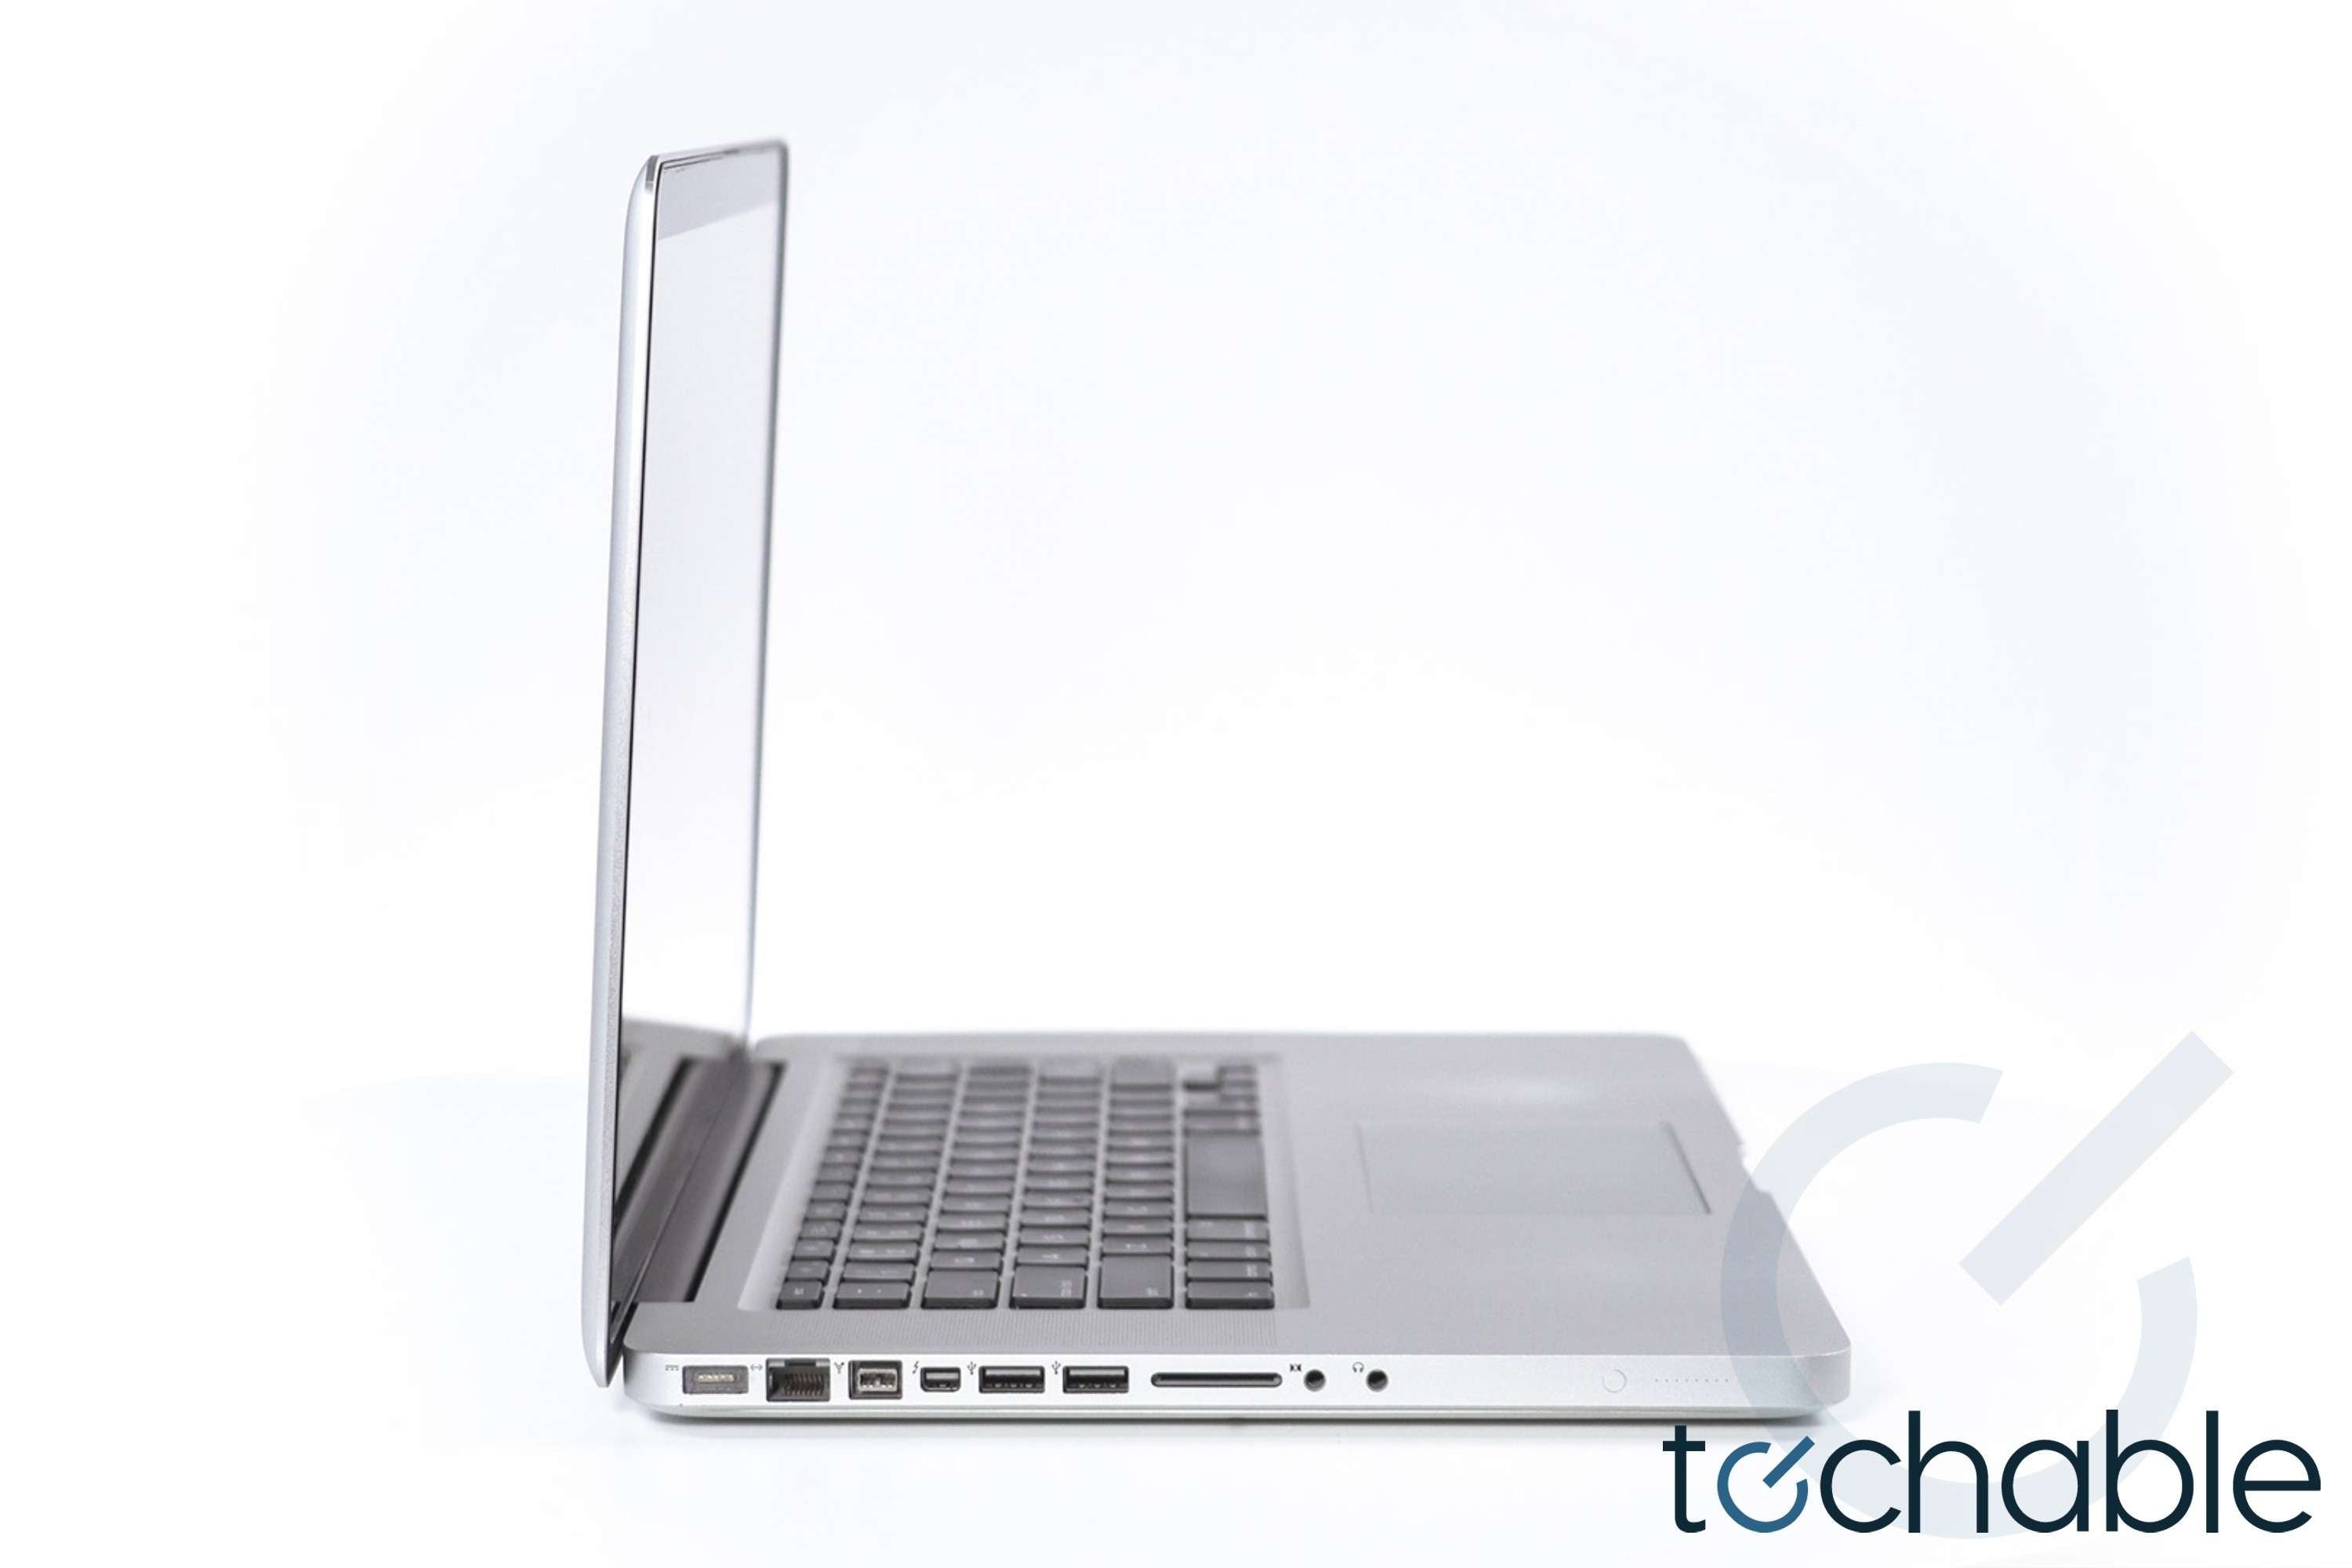 Macbook Pro 17-inch 2.4GHz i7 - 17